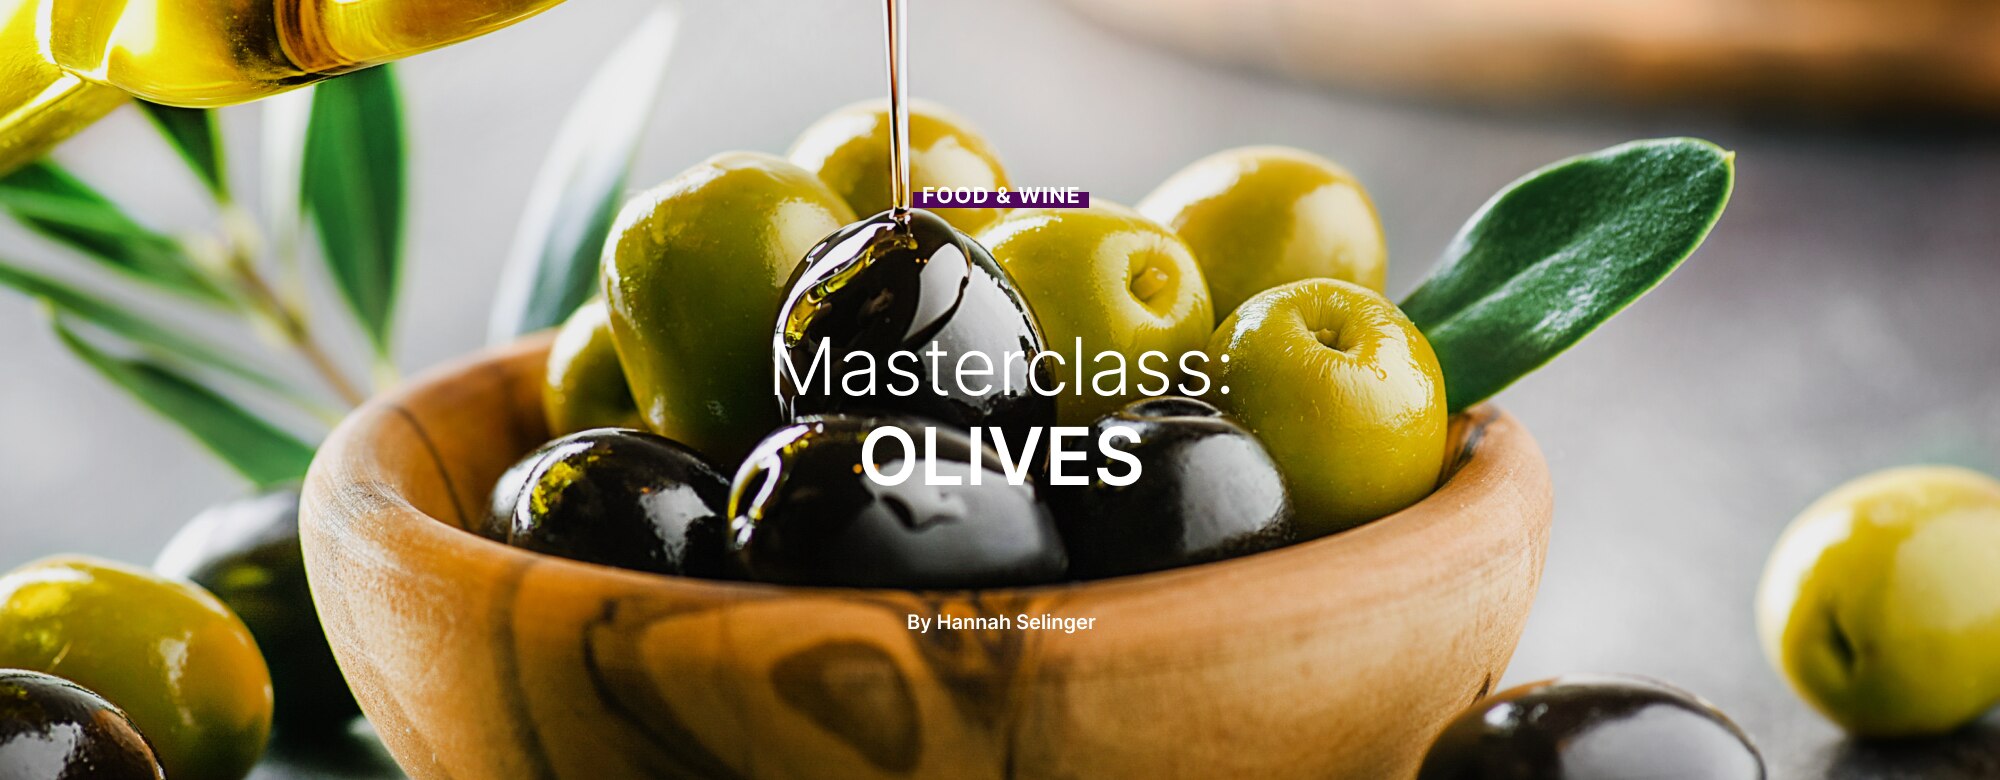 Masterclass: olives